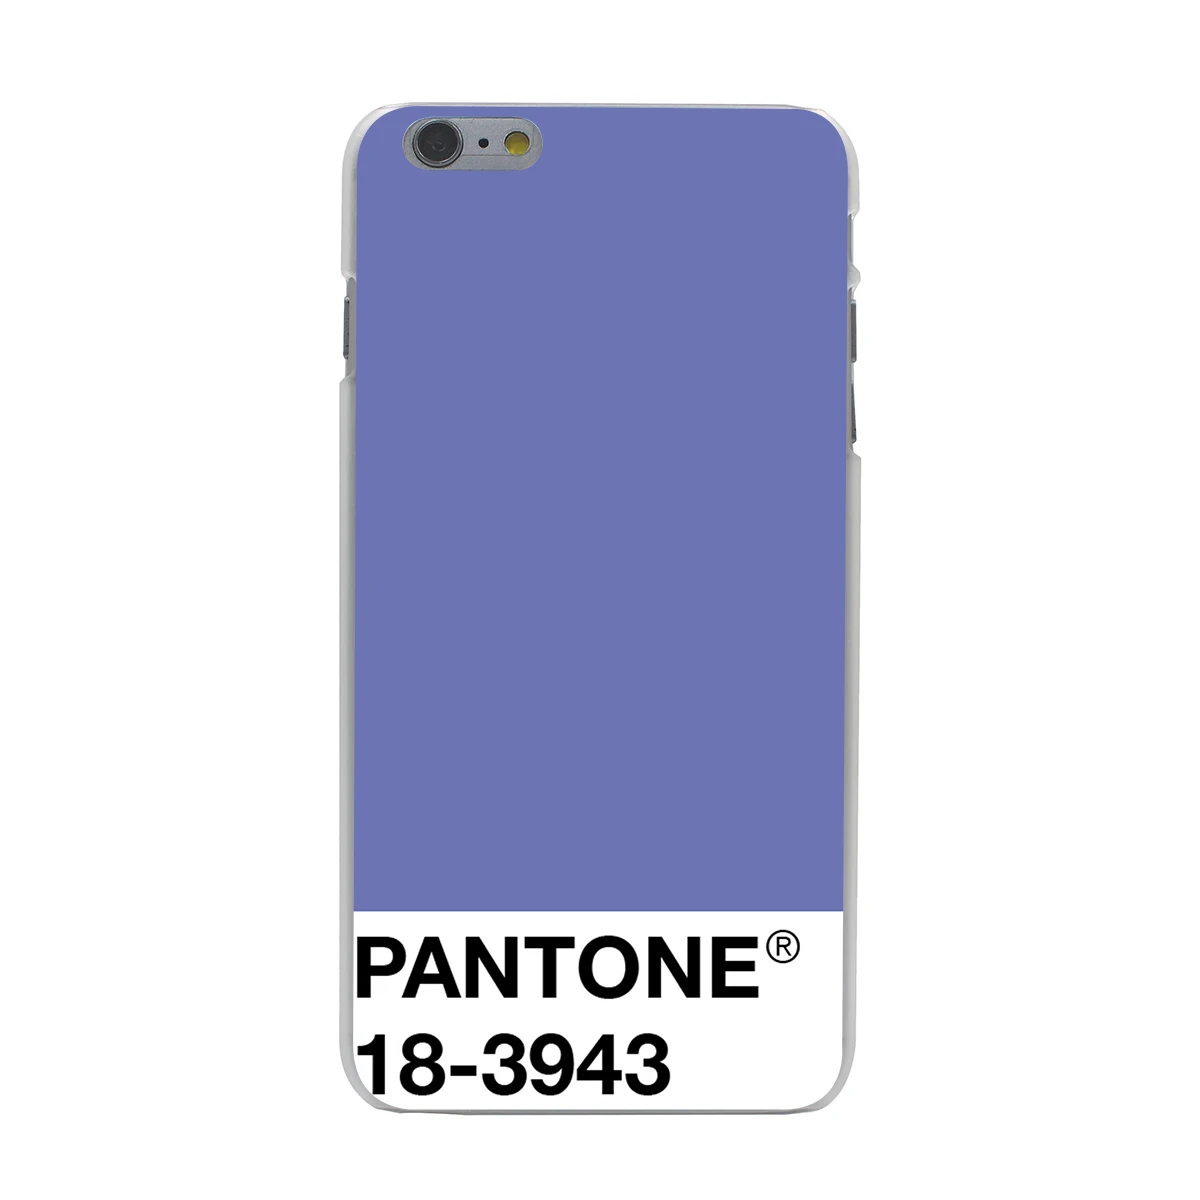 Жесткий чехол Lavaza Caliente Pantone для iPhone XR X XS 11 Pro Max 10 7 8 6S 5 5S SE 4 4s